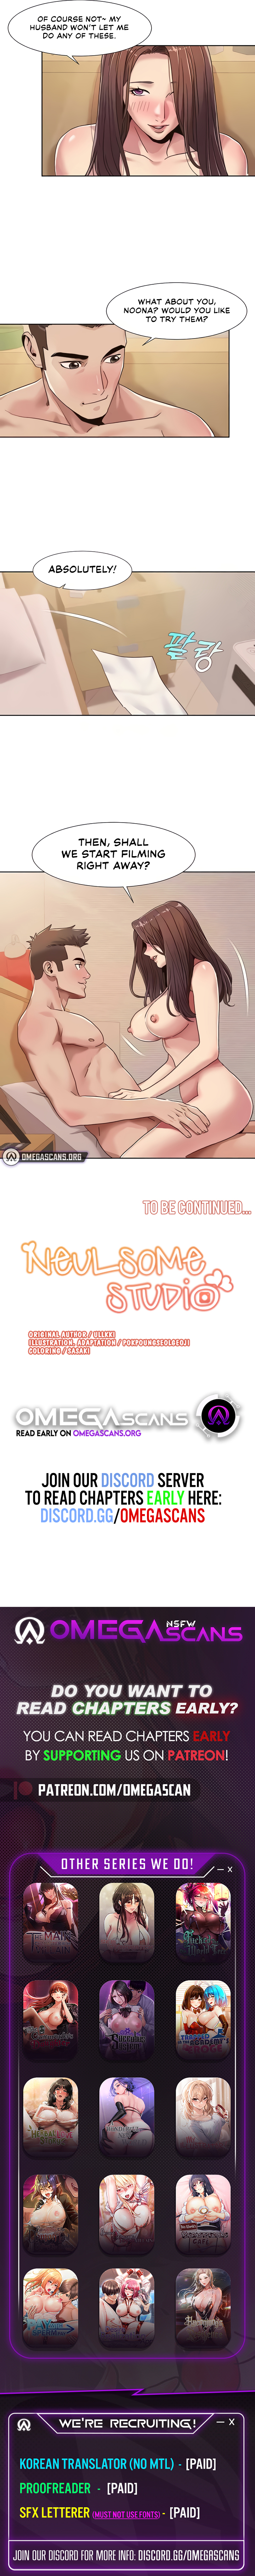 Neulsome Studio NEW image